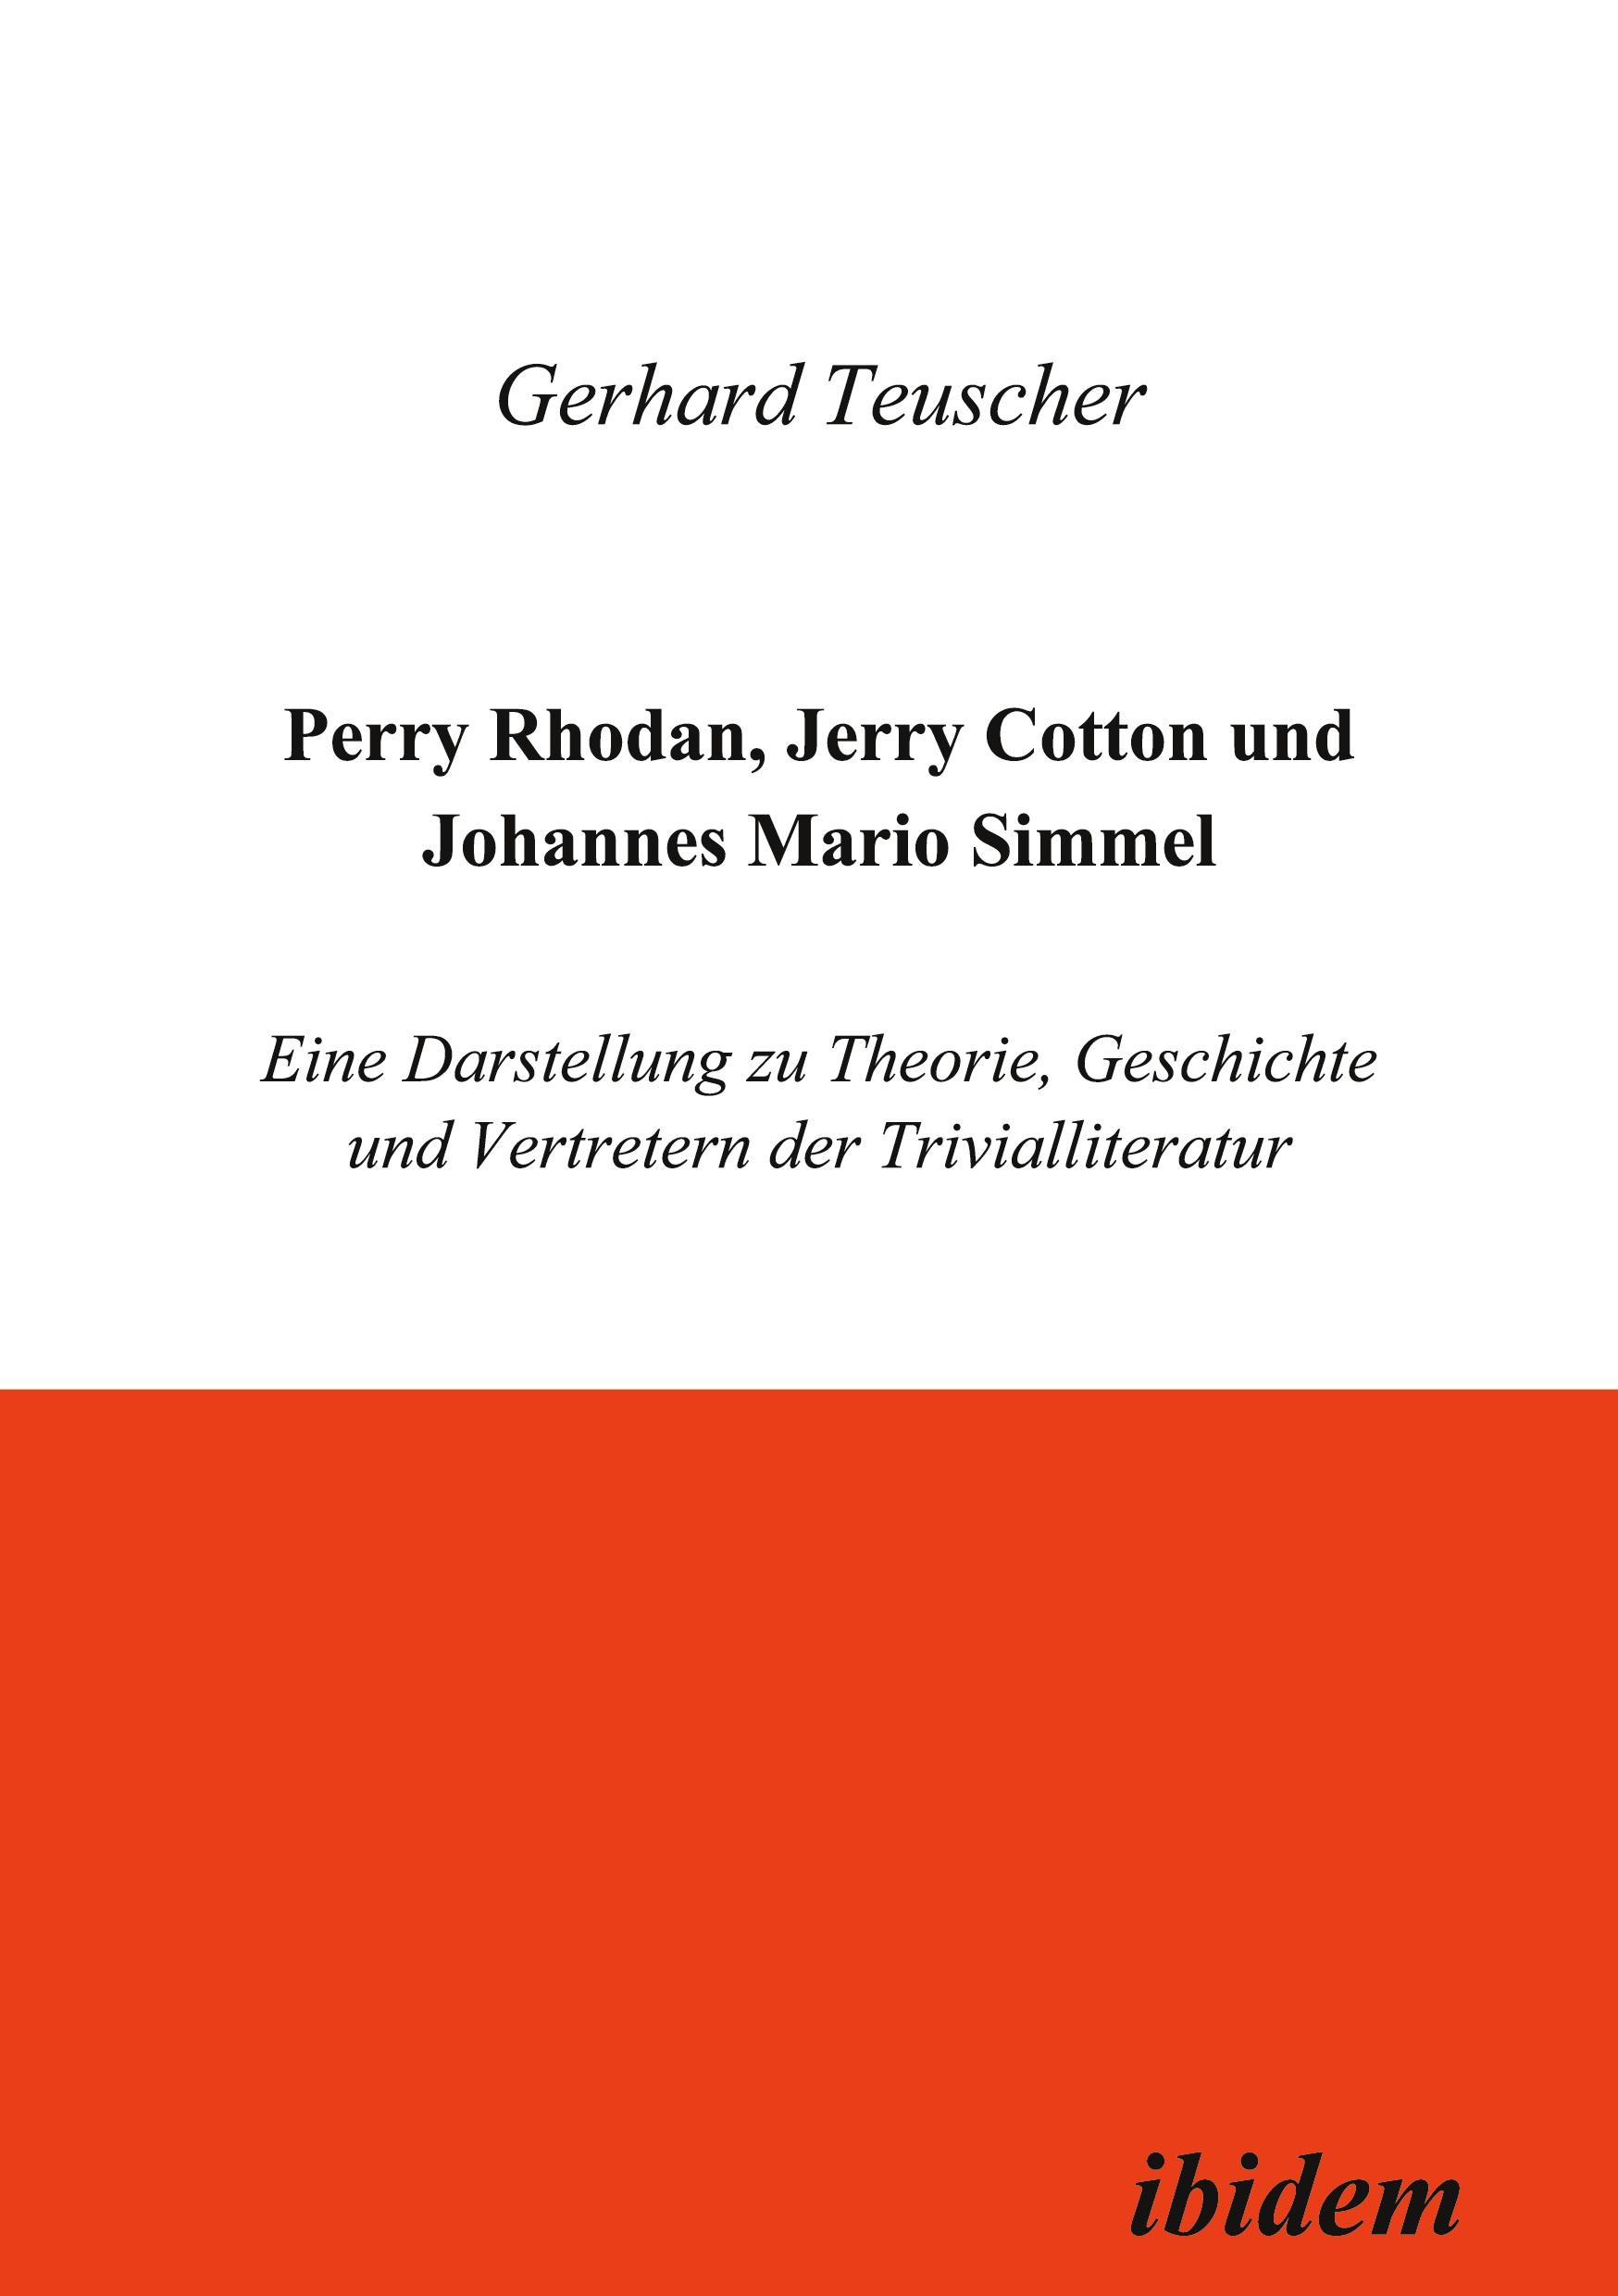 Perry Rhodan, Jerry Cotton und Johannes Mario Simmel / Gerhard Teuscher / Taschenbuch / Paperback / 162 S. / Deutsch / 1999 / ibidem / EAN 9783932602764 - Teuscher, Gerhard